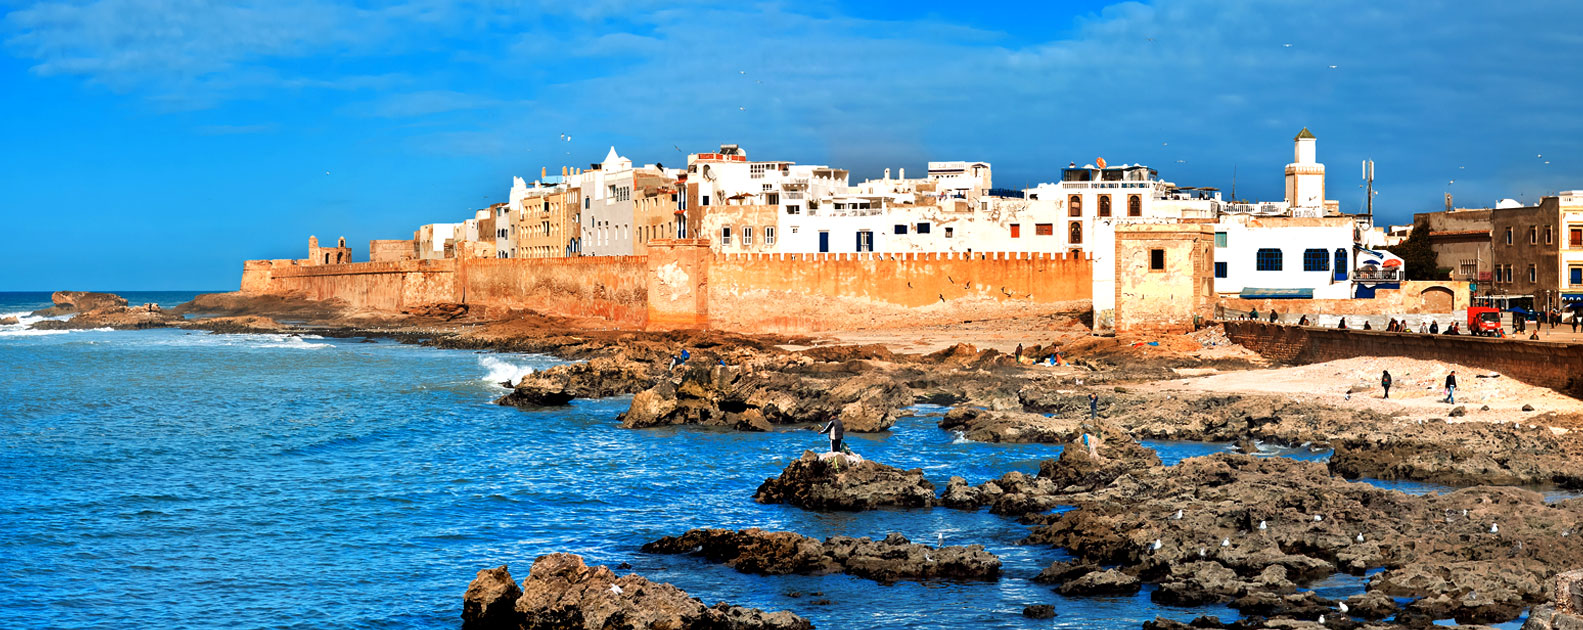 Essaouira, enough eye candy to admire